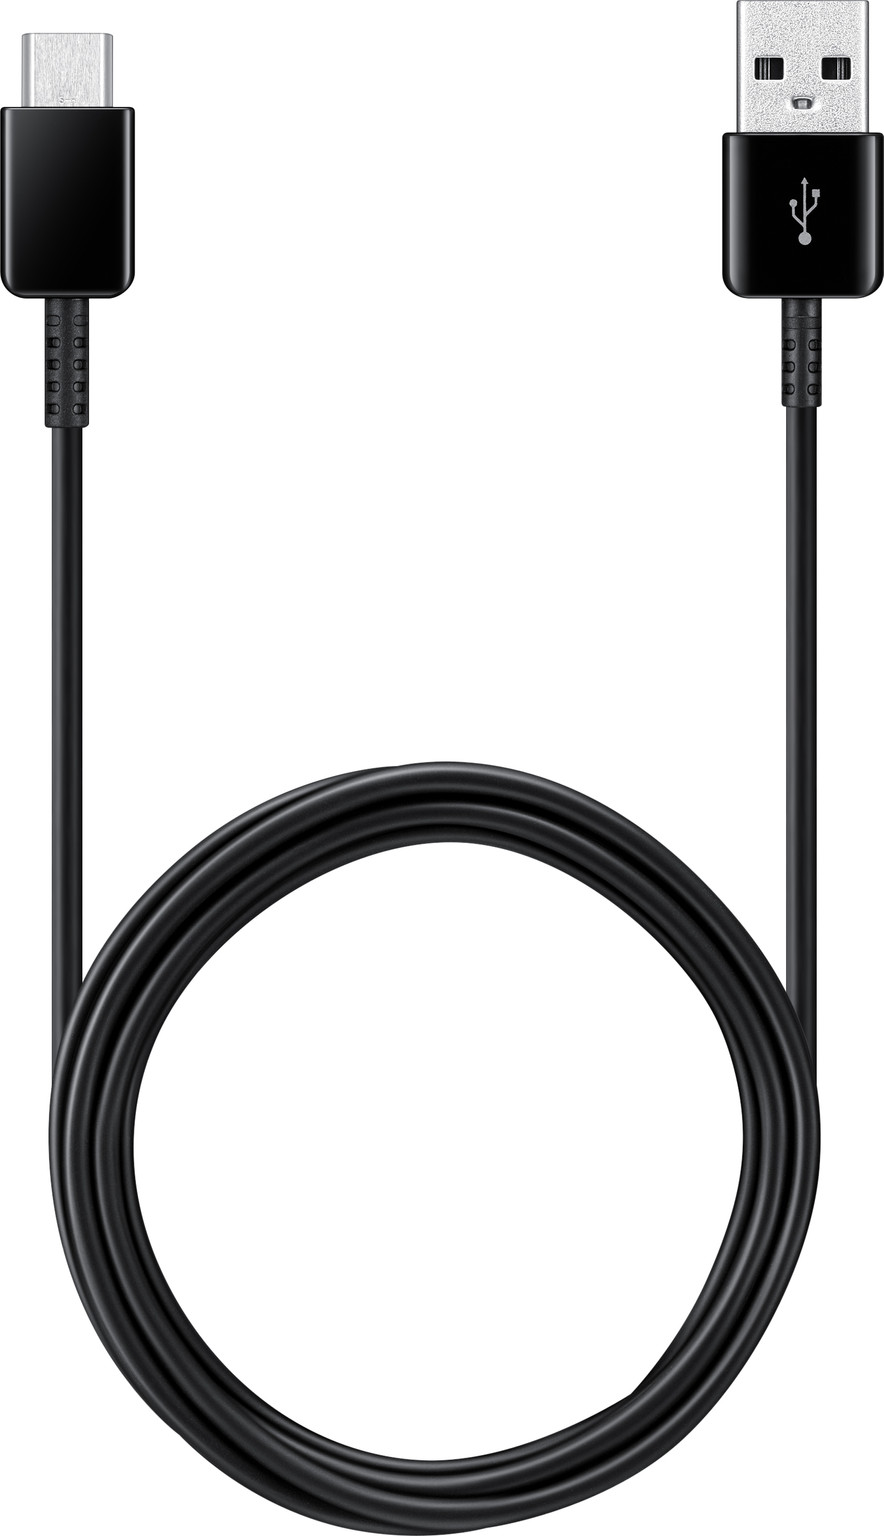 grens essay snijden Samsung Galaxy S9+ Oplaadkabel USB C 2 meter zwart - Gsm-Oplader.nl